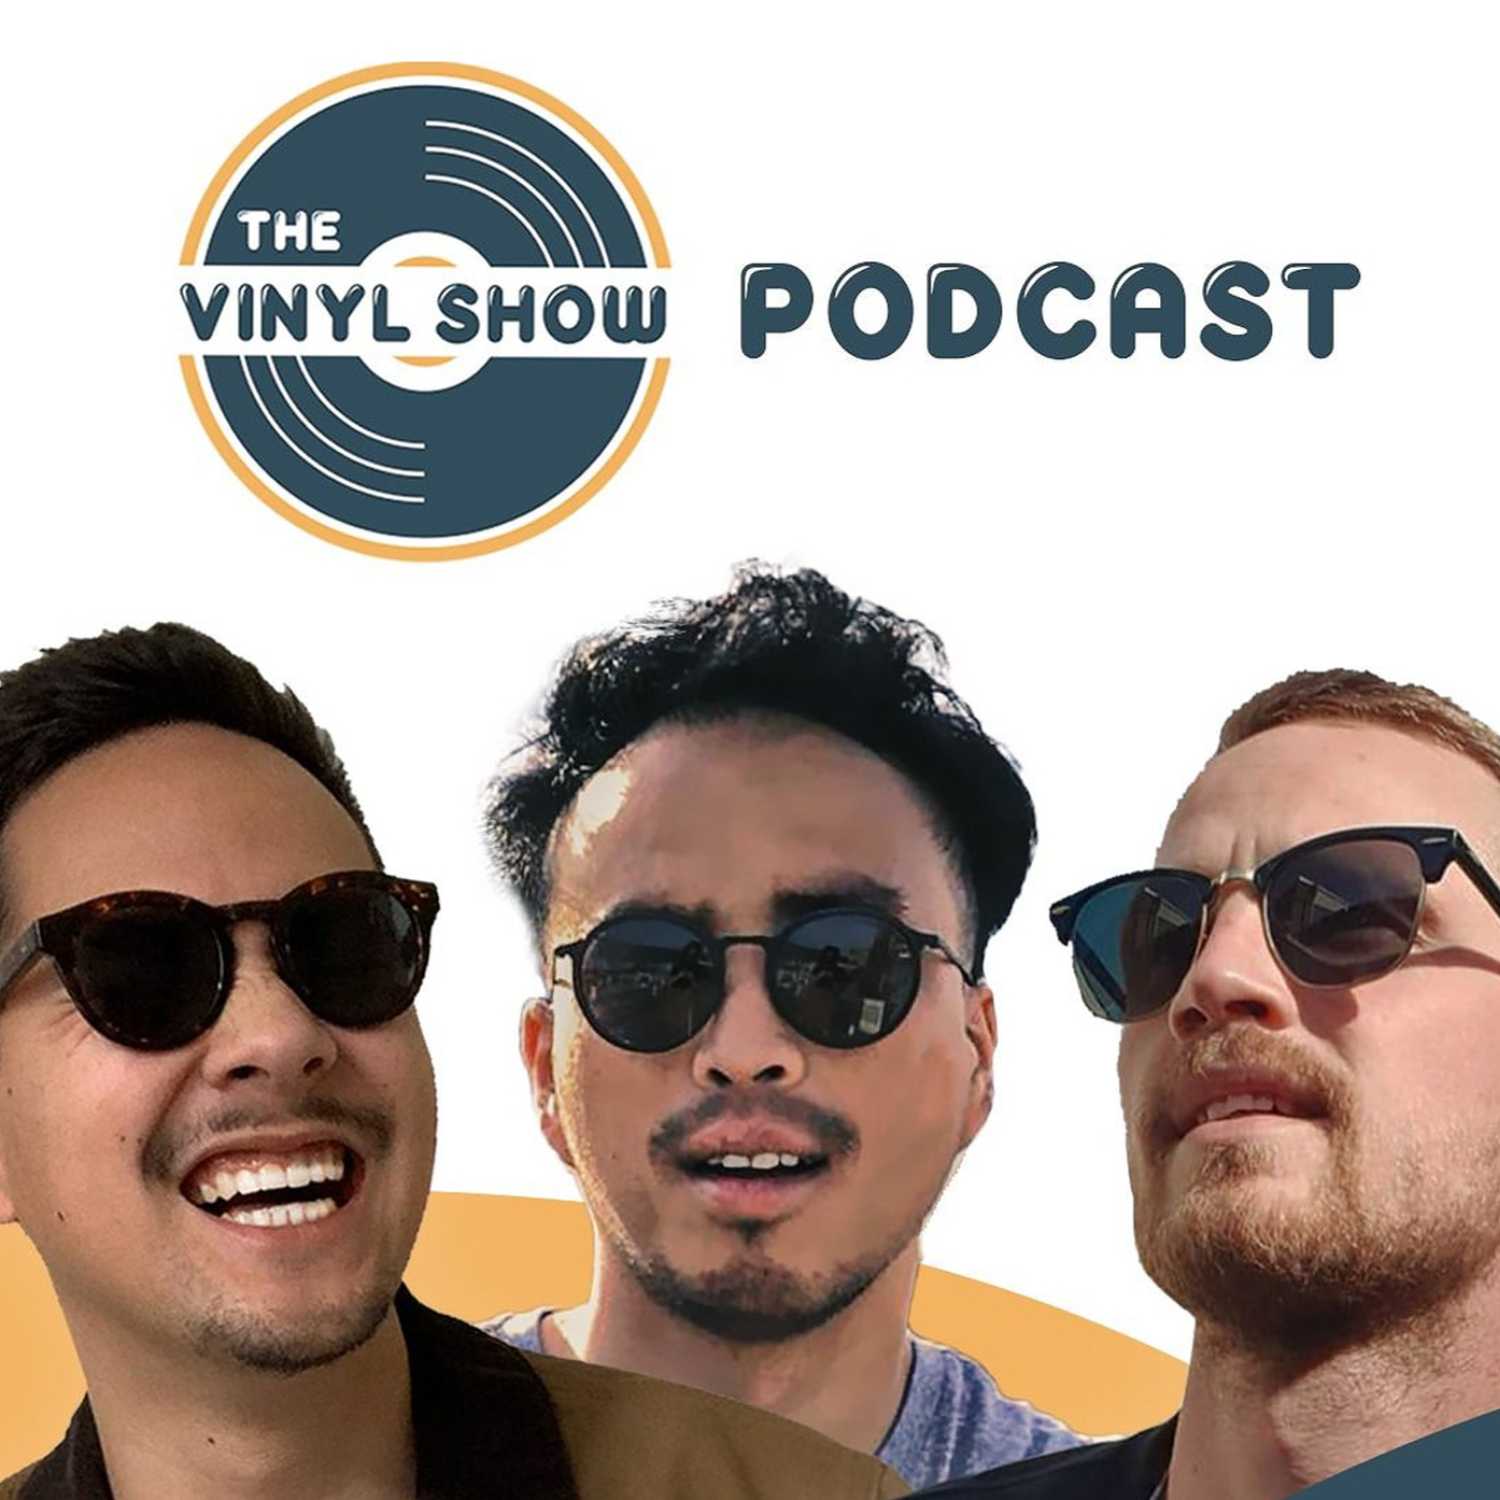 The Vinyl Show Podcast logo